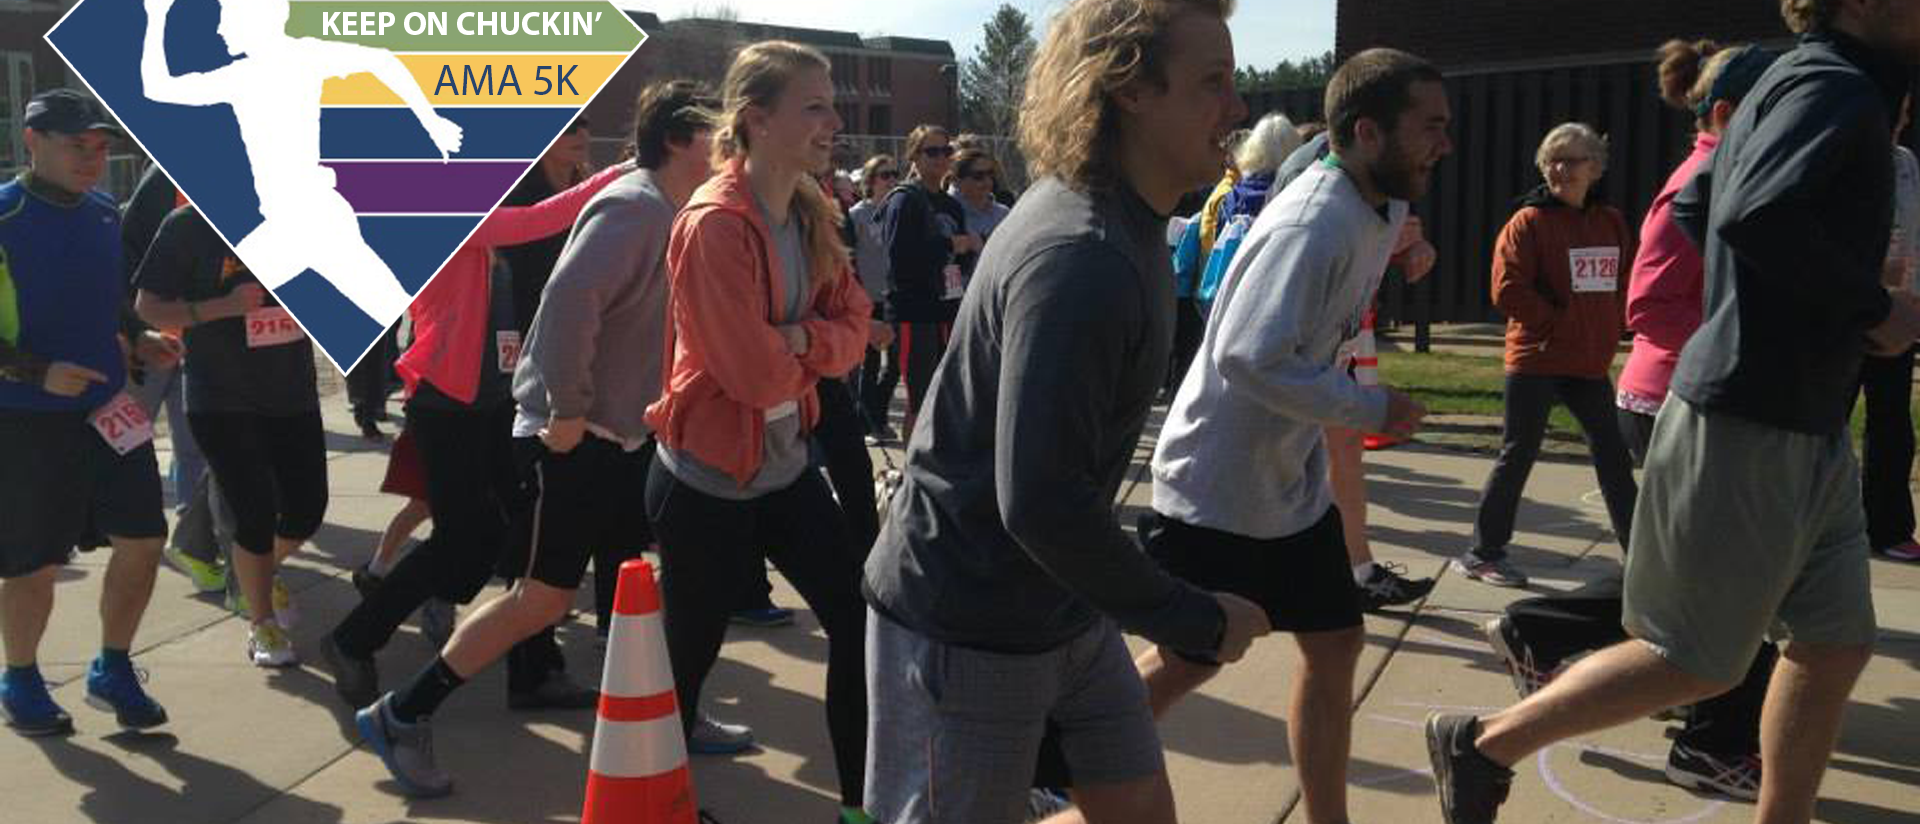 Students run at the annual Keep on Chuckin' 5K